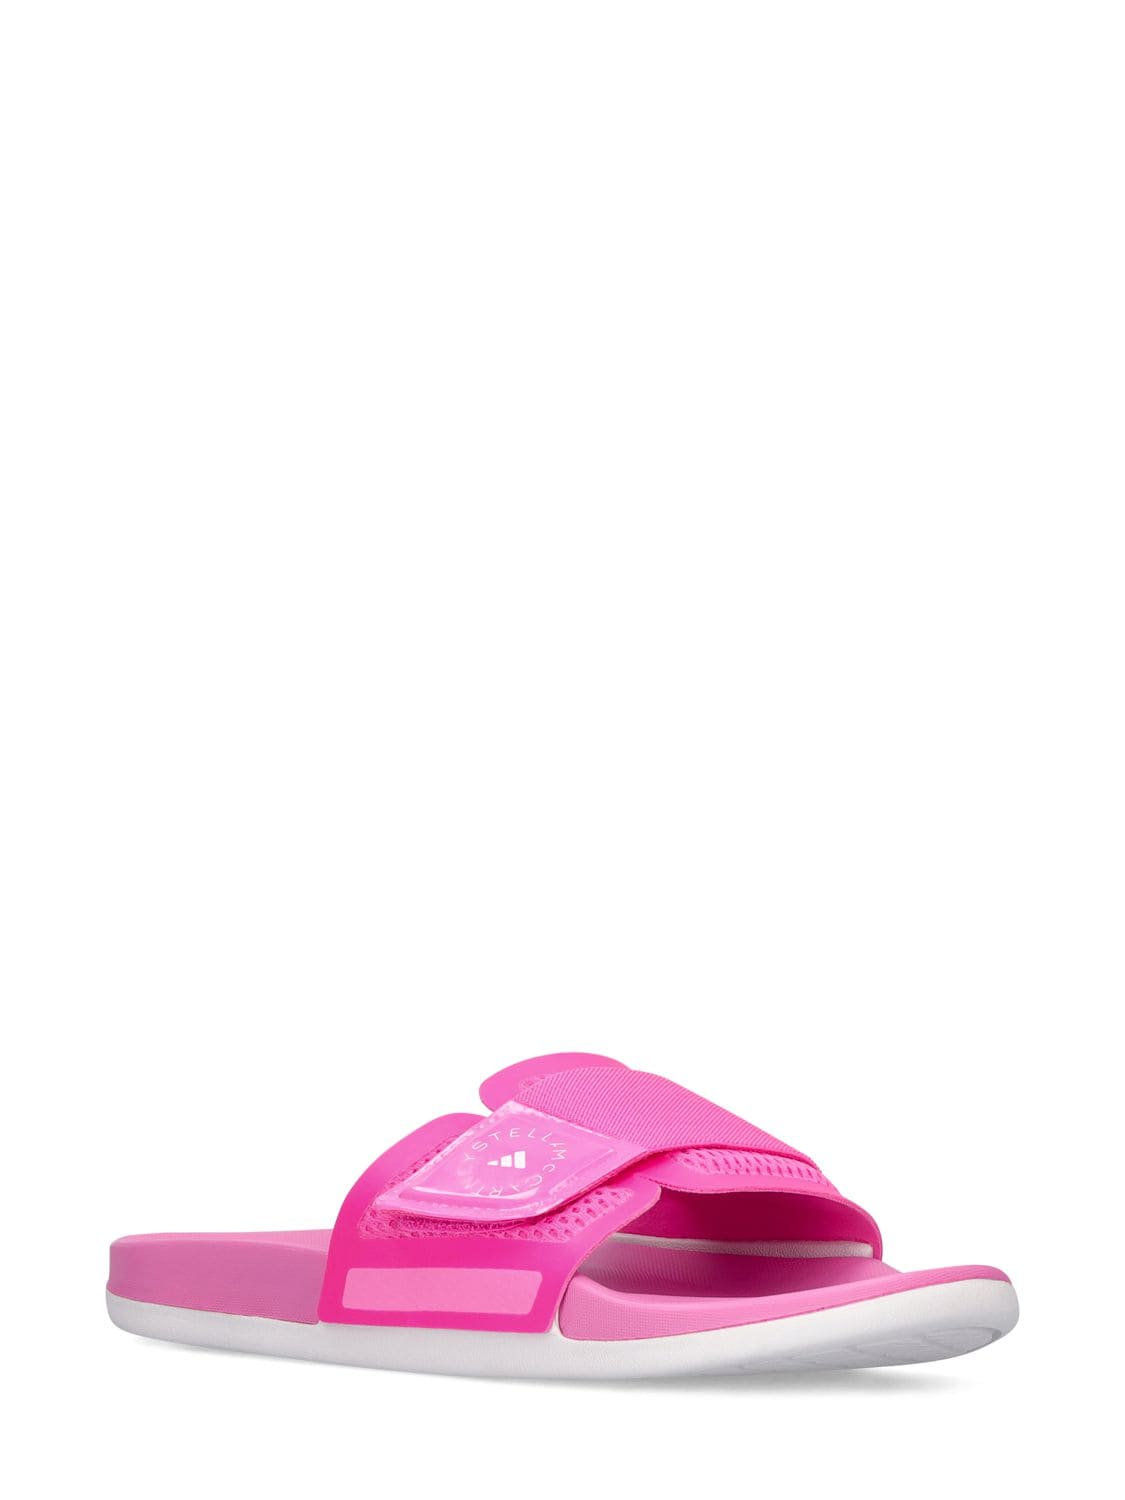 Adidas X Stella McCartney Asmc Slide Sandals